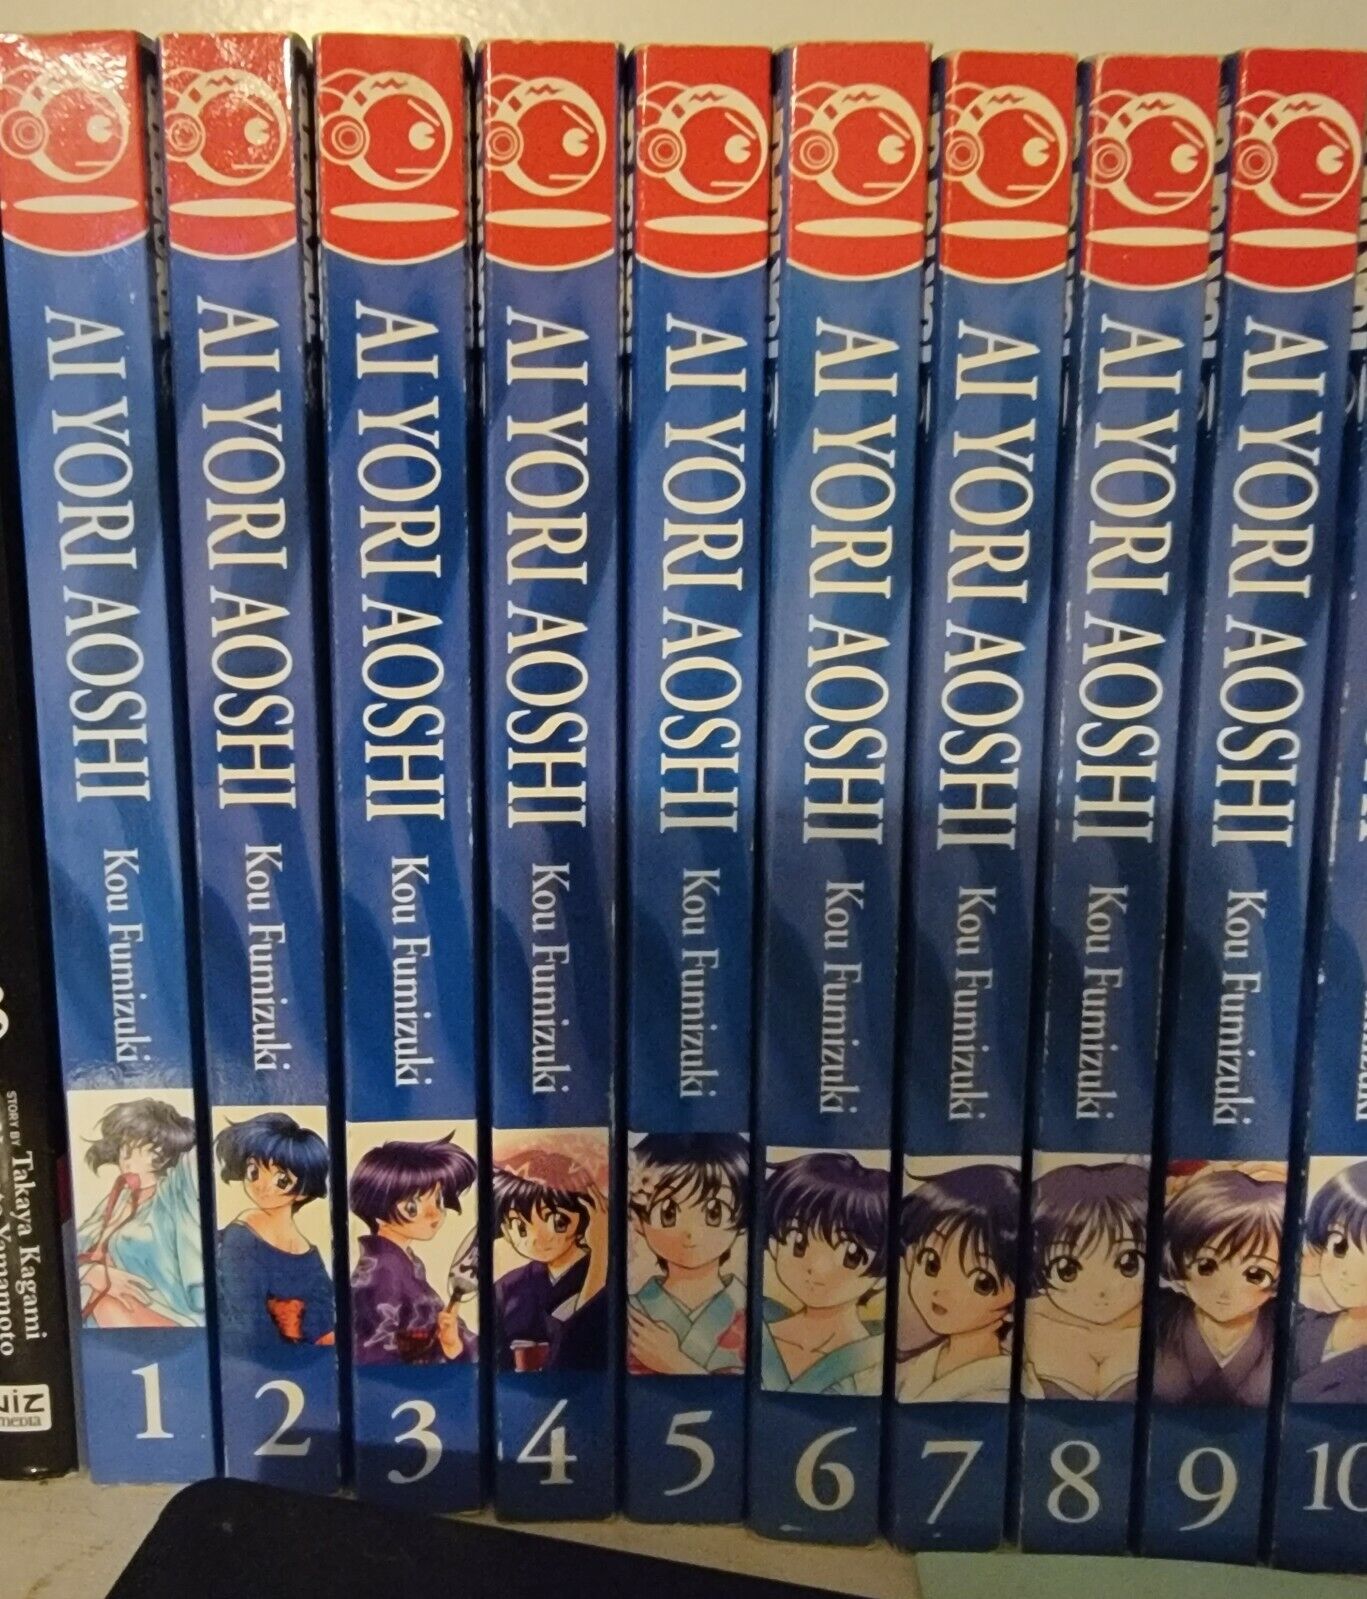 AI Yori Aoshi Manga by Kou Fumizuki Volumes 1-17 Complete Set English